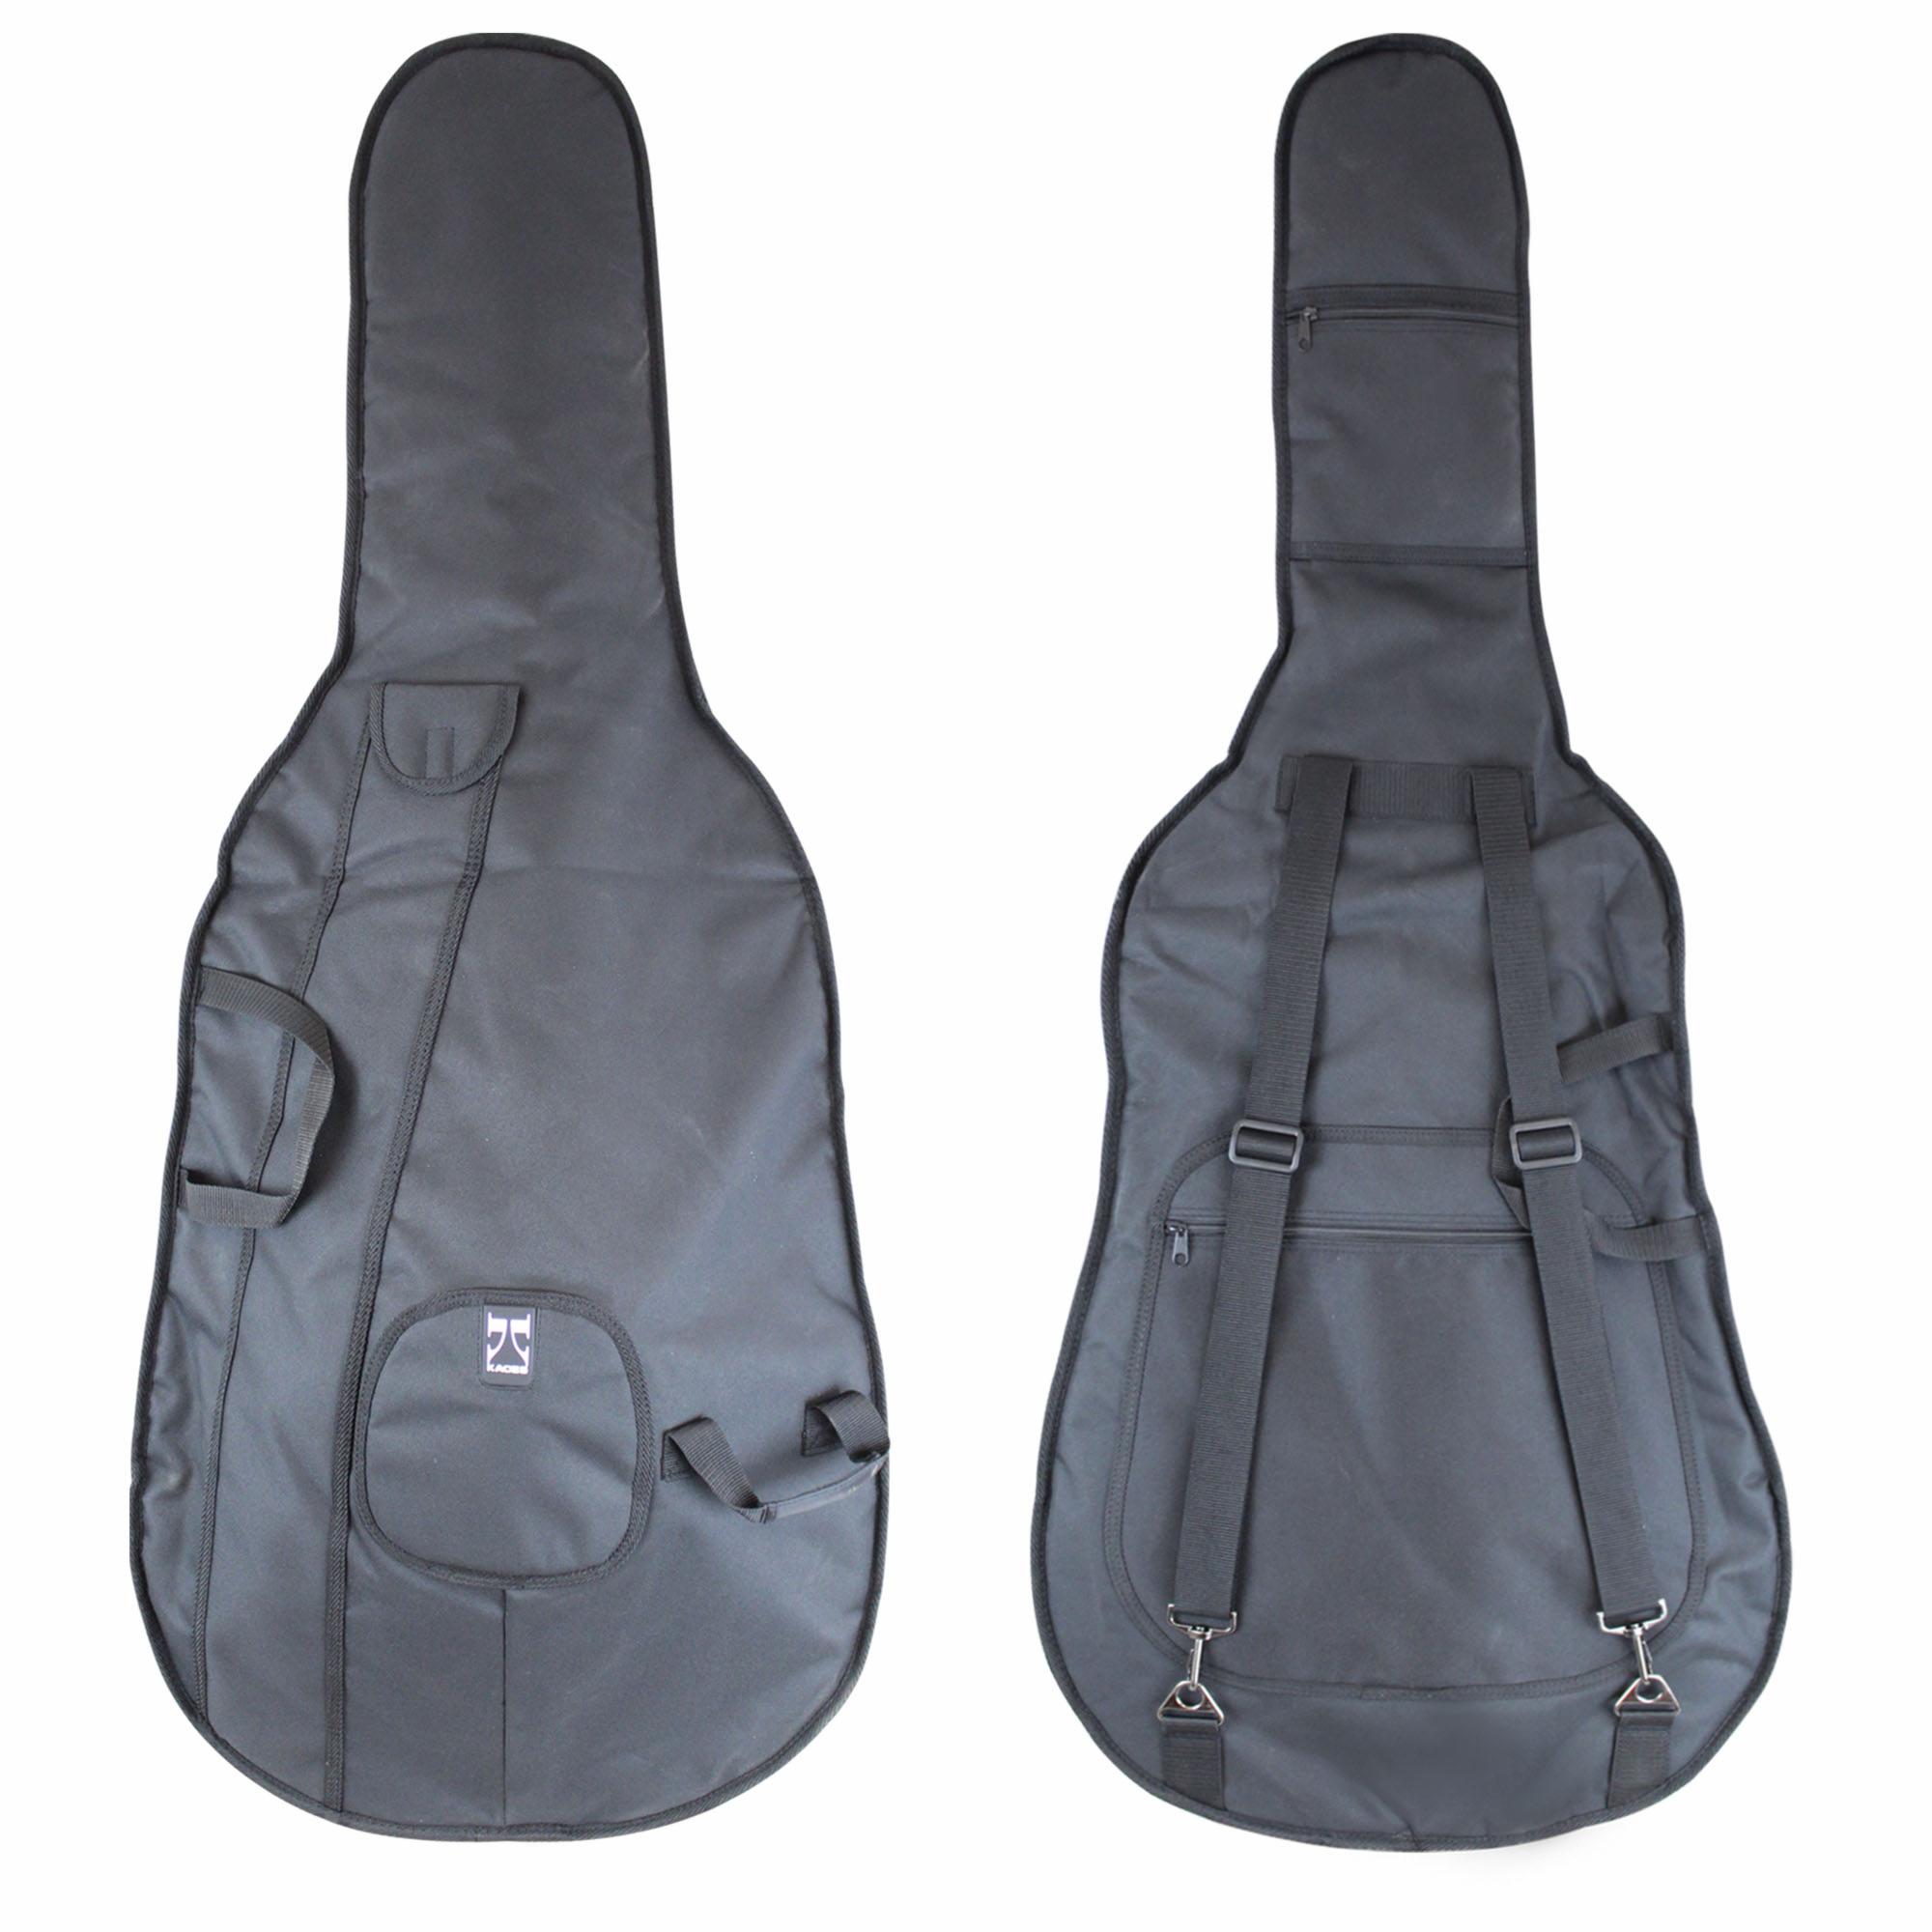 Kaces University Deluxe Cello Bag 12mm | Southwest Strings